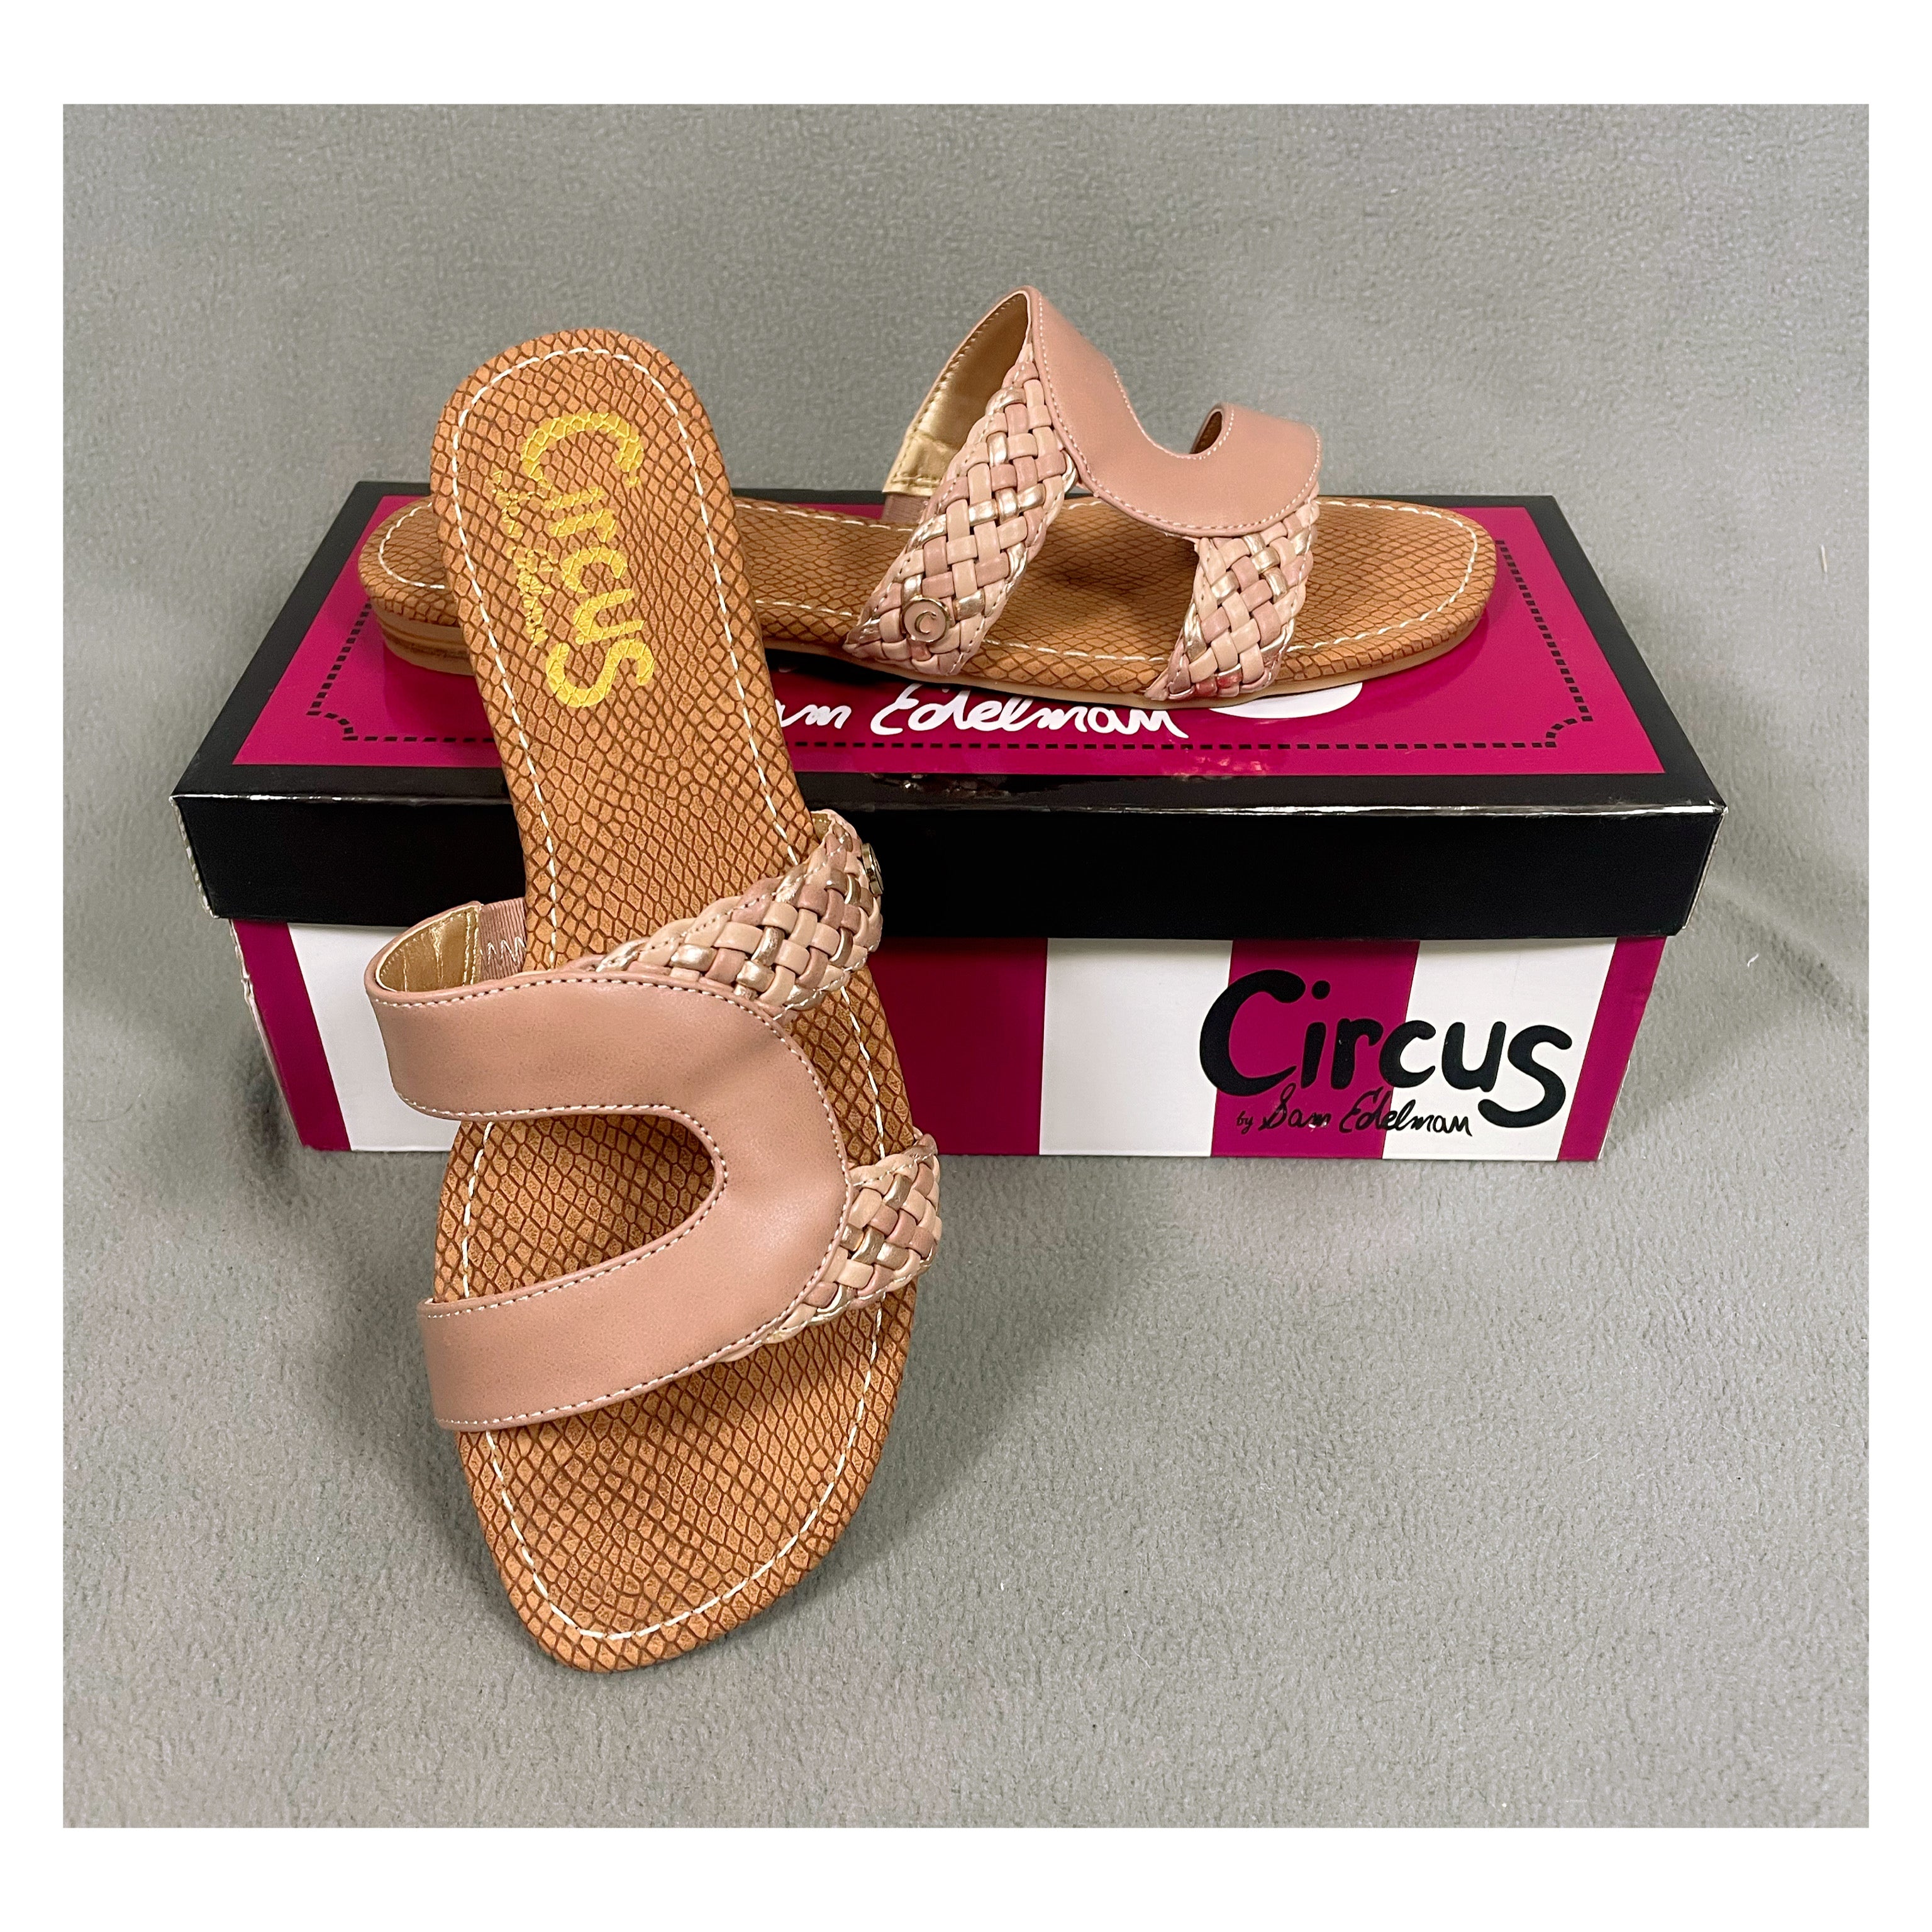 Circus Sam Edelman tan Betty sandals, size 8, NEW IN BOX!